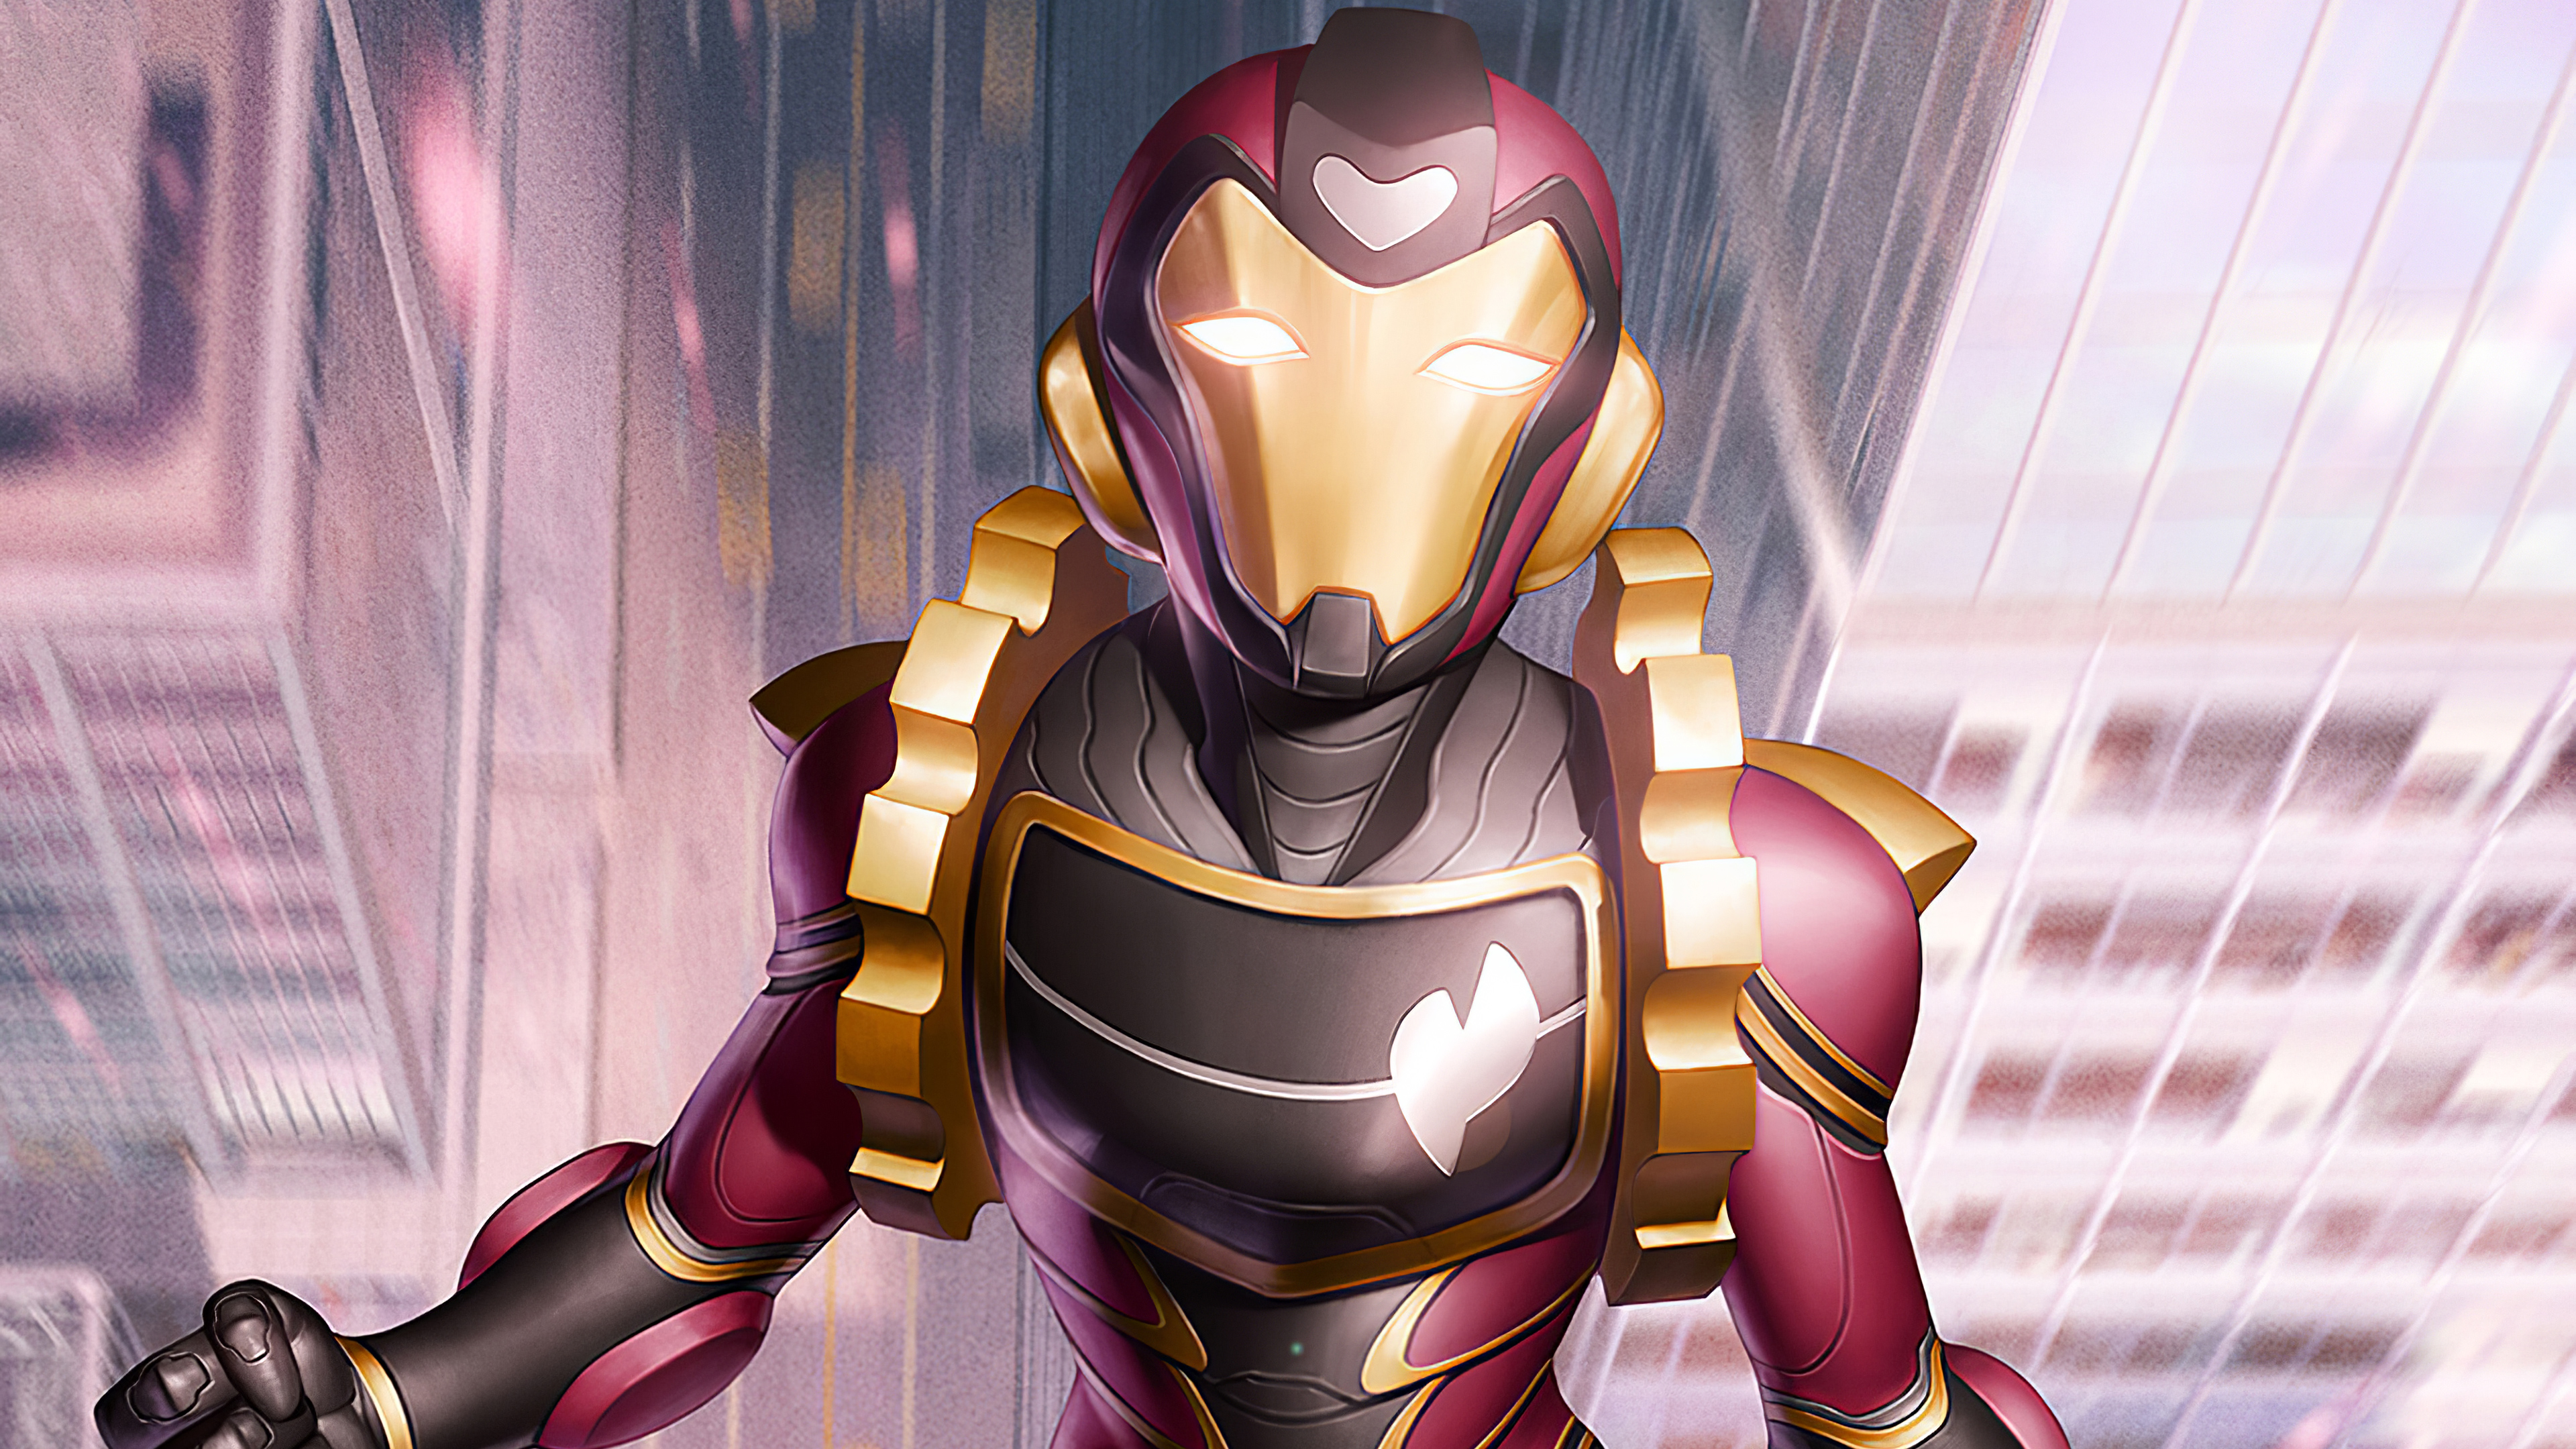 Iron Man Marvel Comics 3840x2160